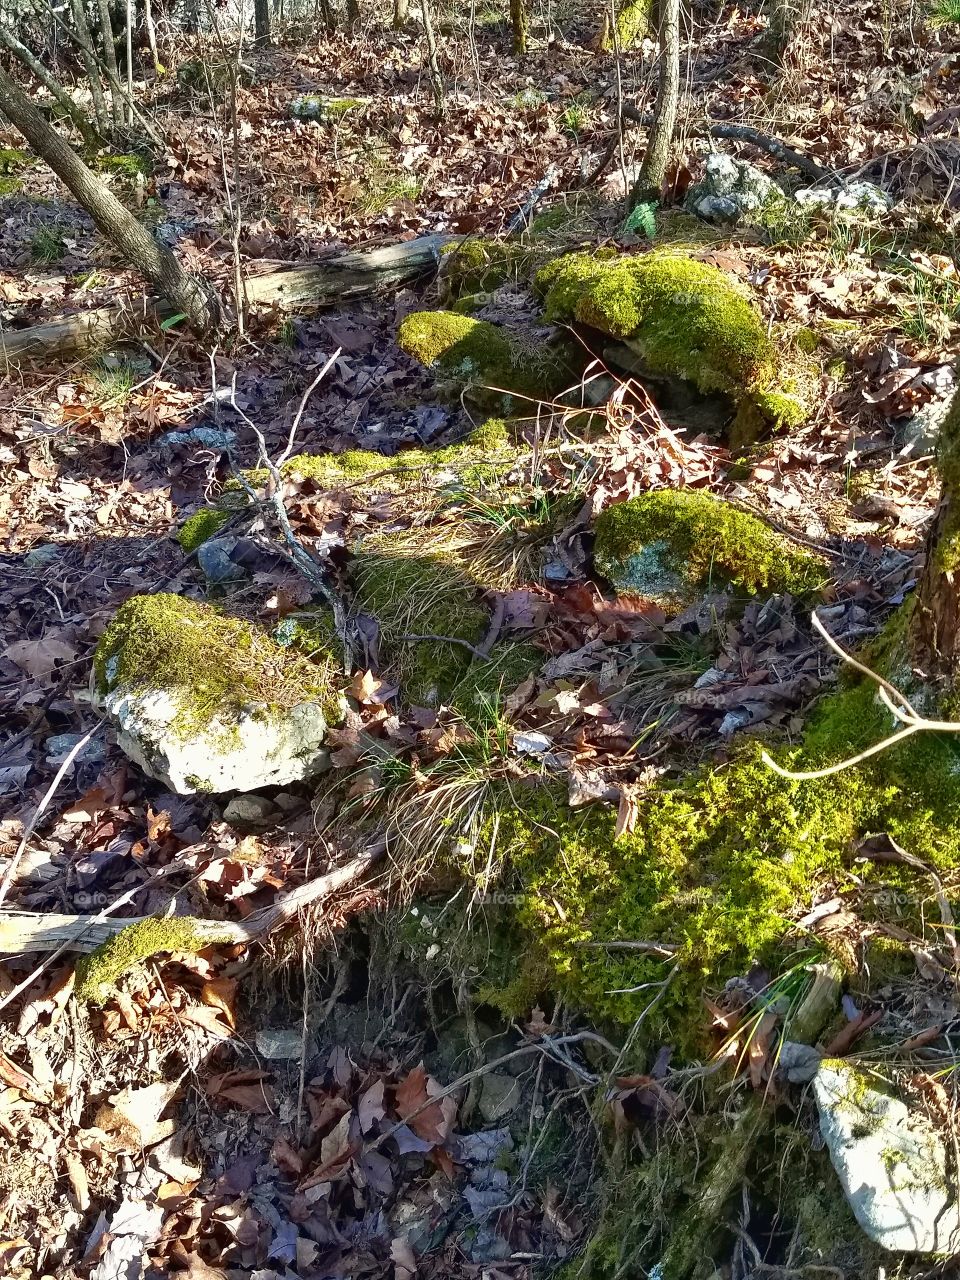 Mossy rocks along hiking trail at Murder Rock, Branson Missouri.